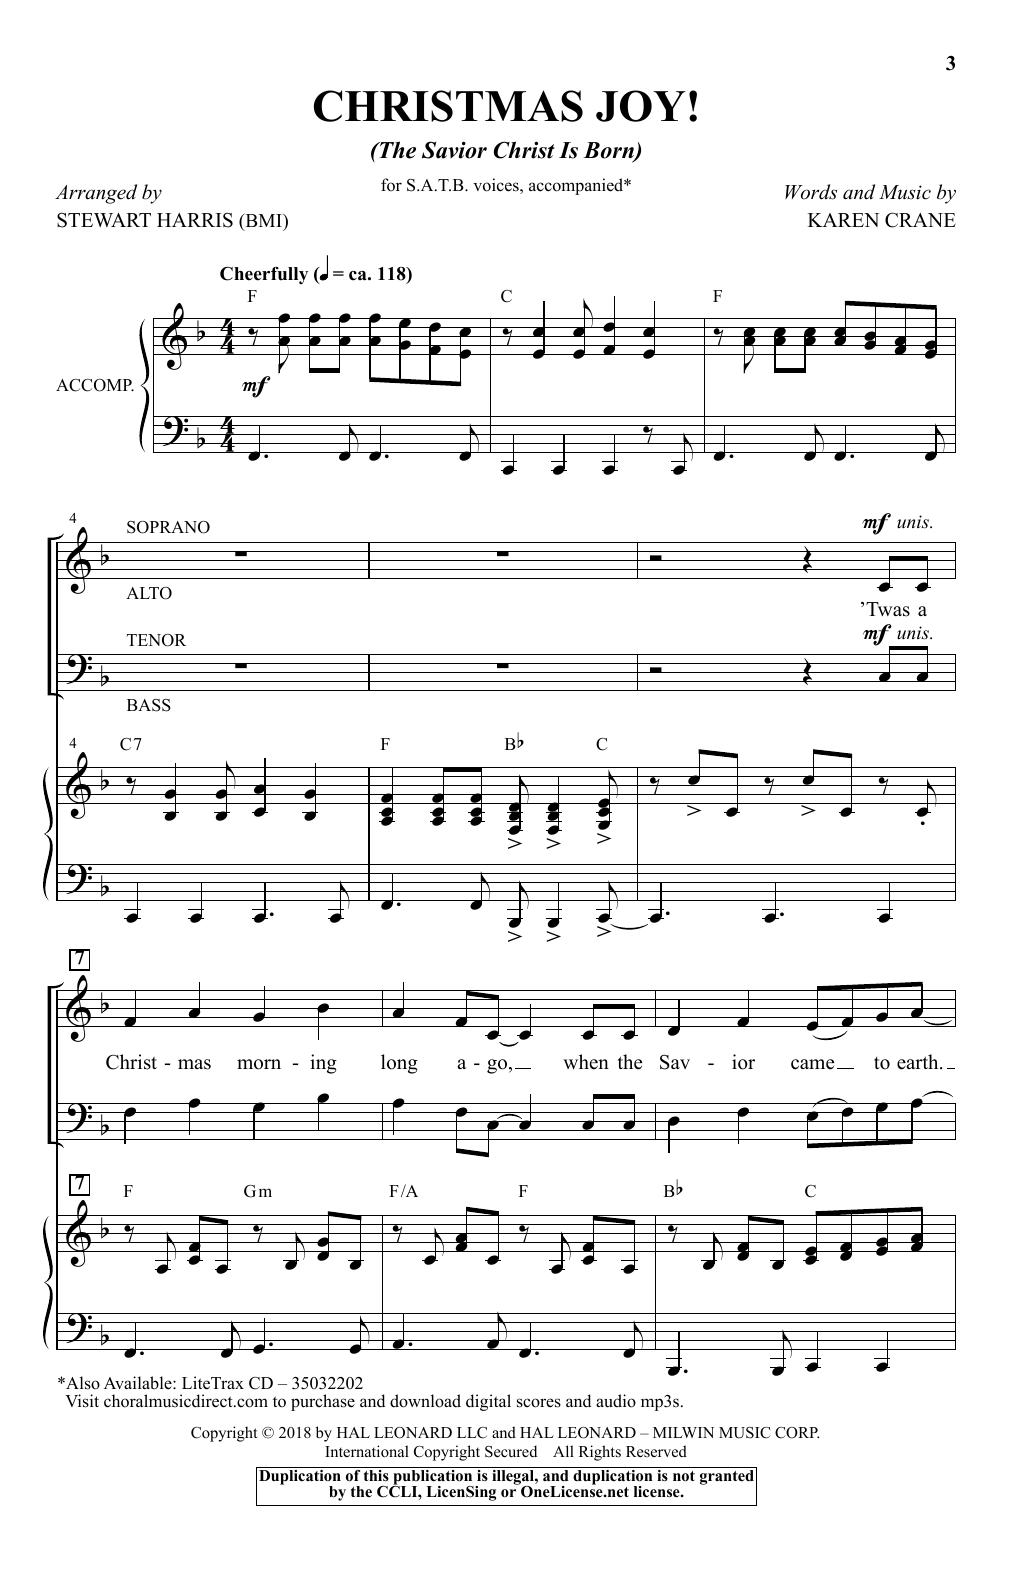 Download Karen Crane Christmas Joy! (The Savior Christ Is Born) (arr. Stewart Harris) Sheet Music and learn how to play SATB Choir PDF digital score in minutes